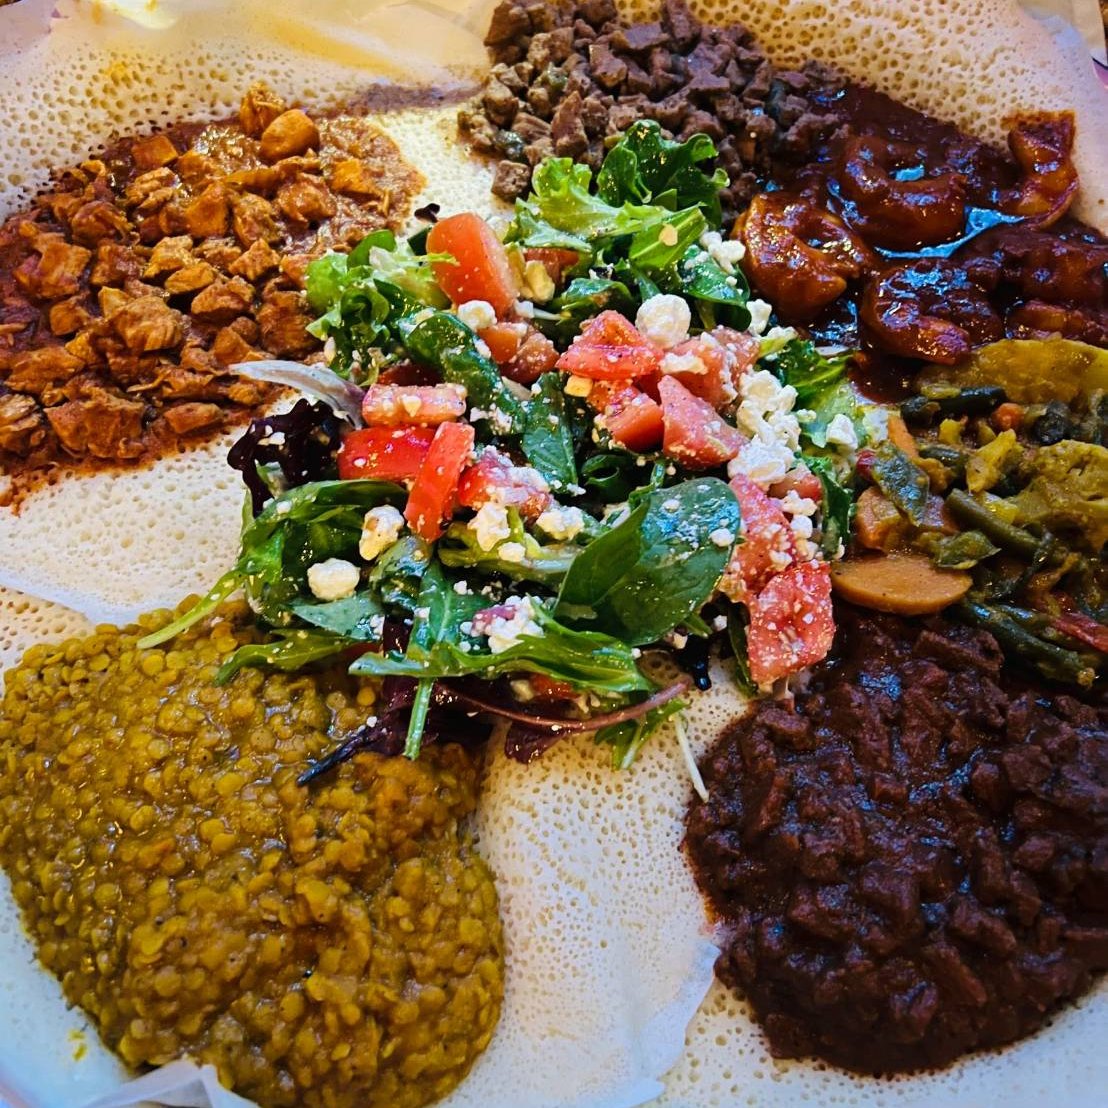 Food from Asmara Restaurant